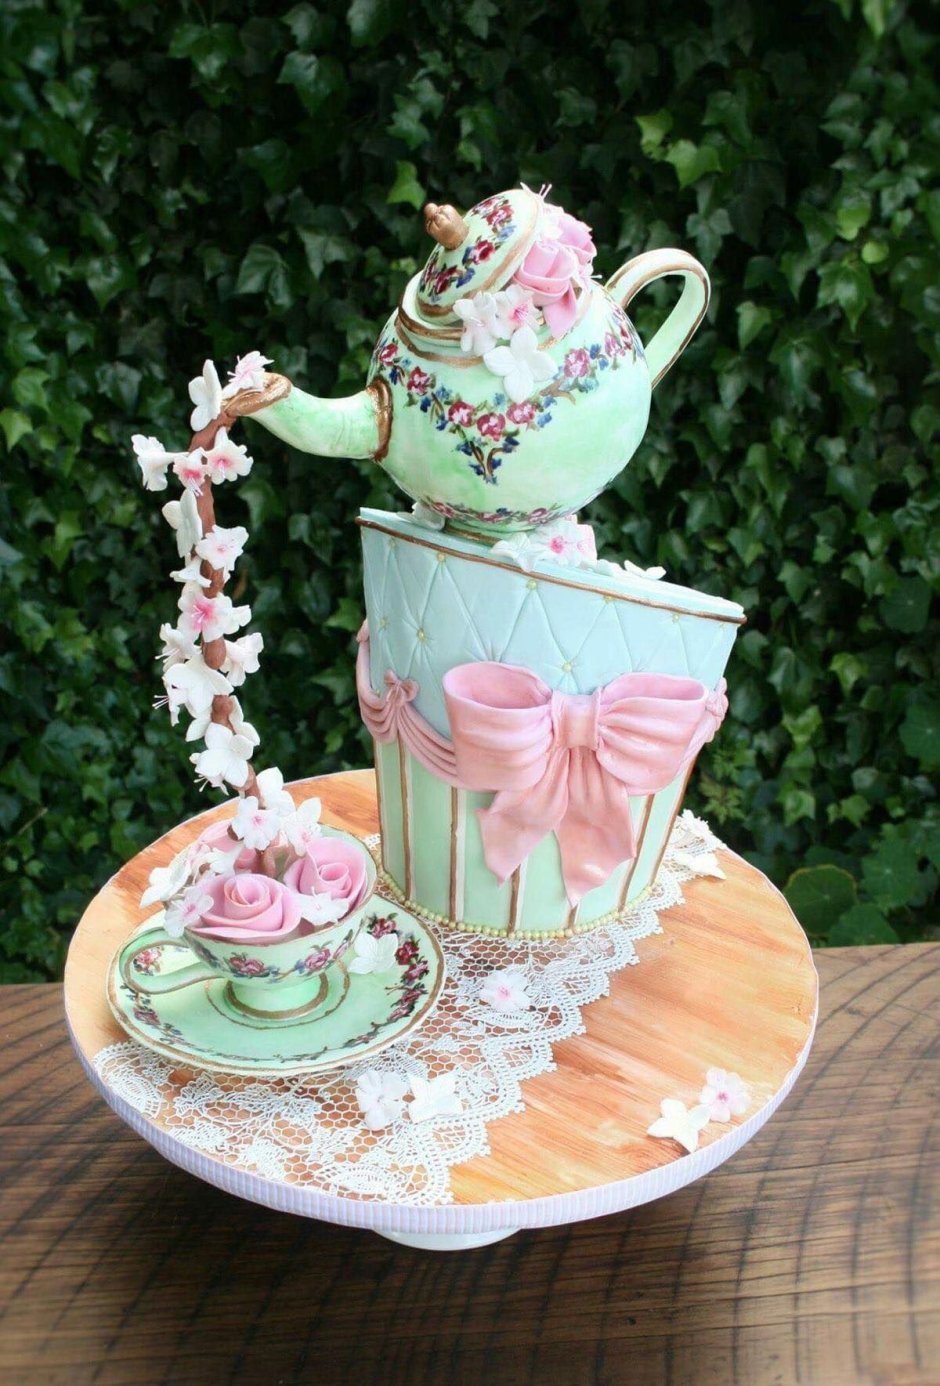 Торт чайник с чашками